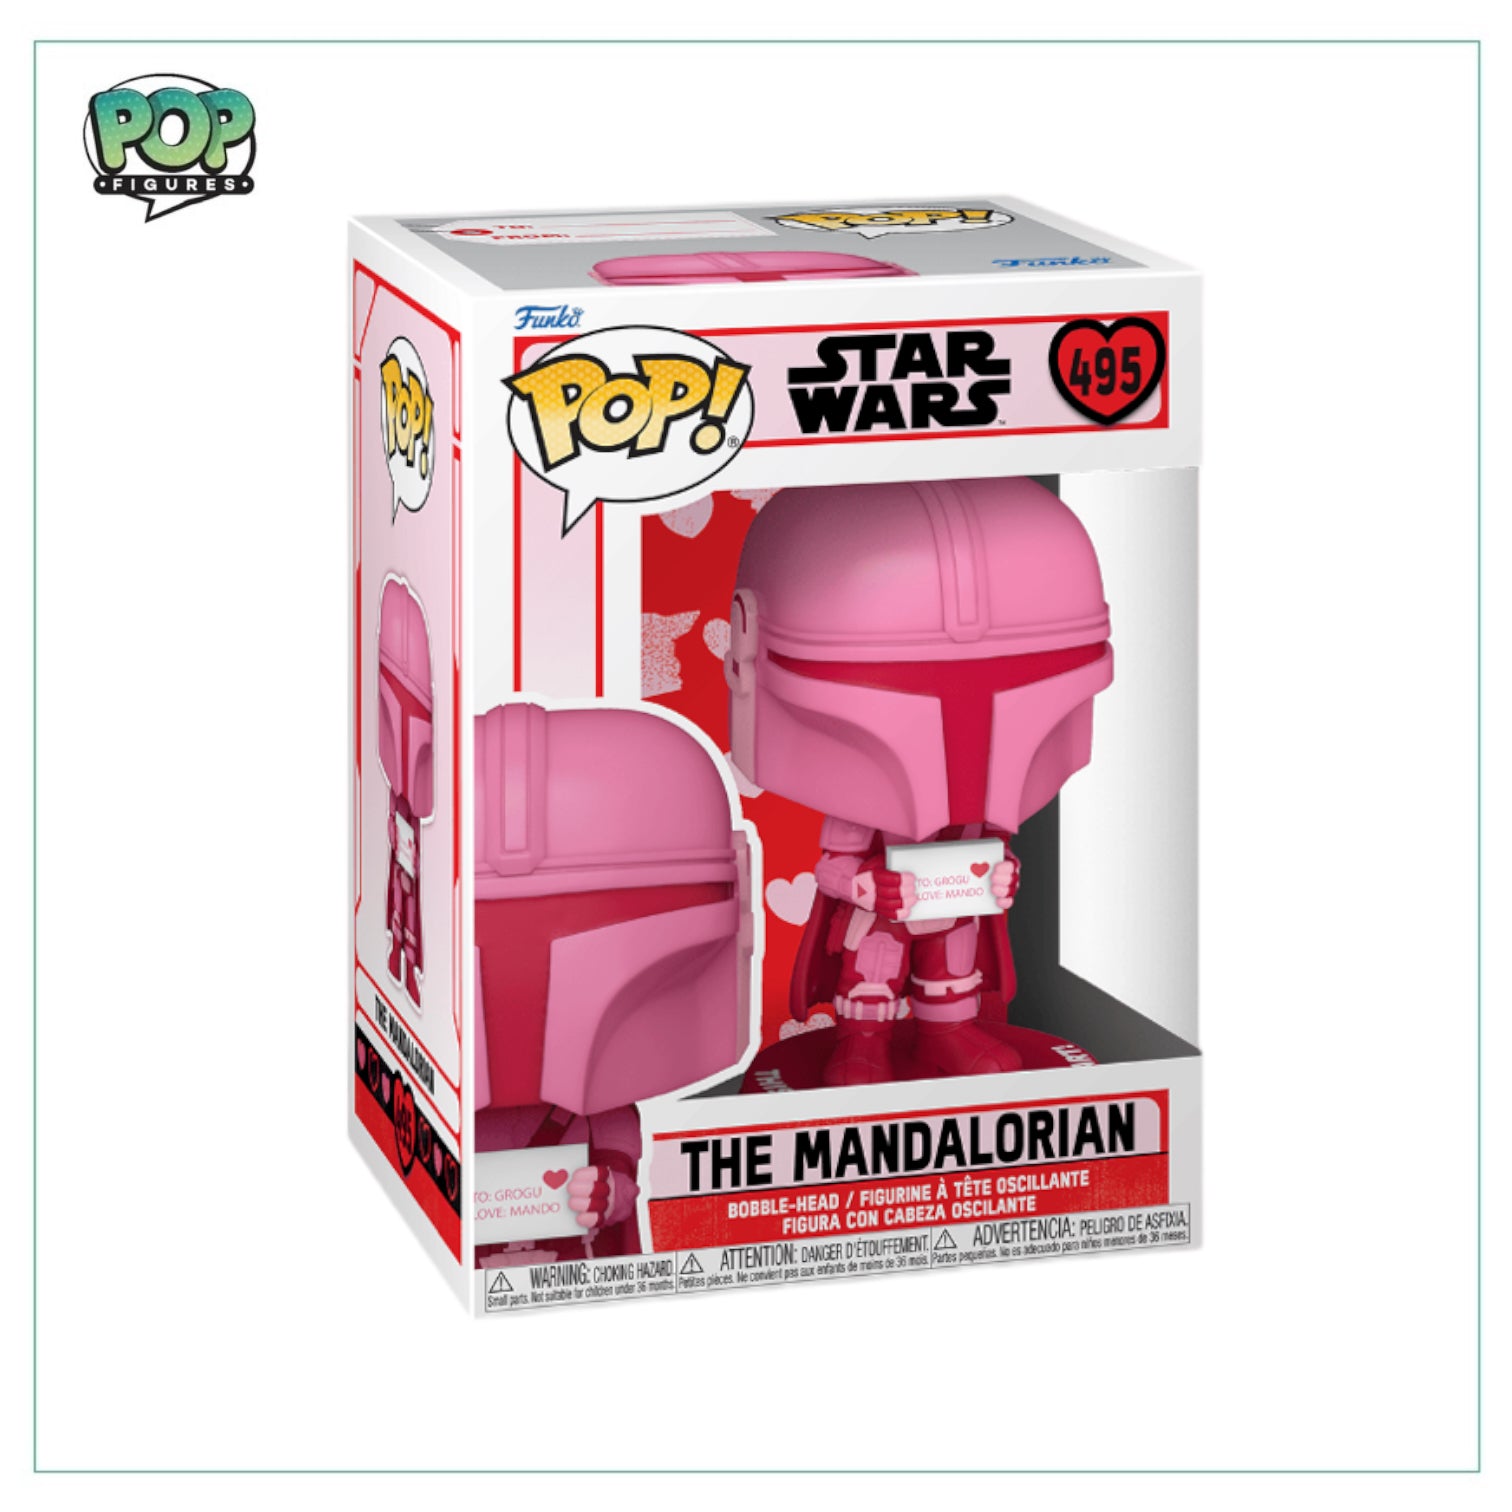 The Mandalorian #495 Funko Pop! - Star Wars Valentine